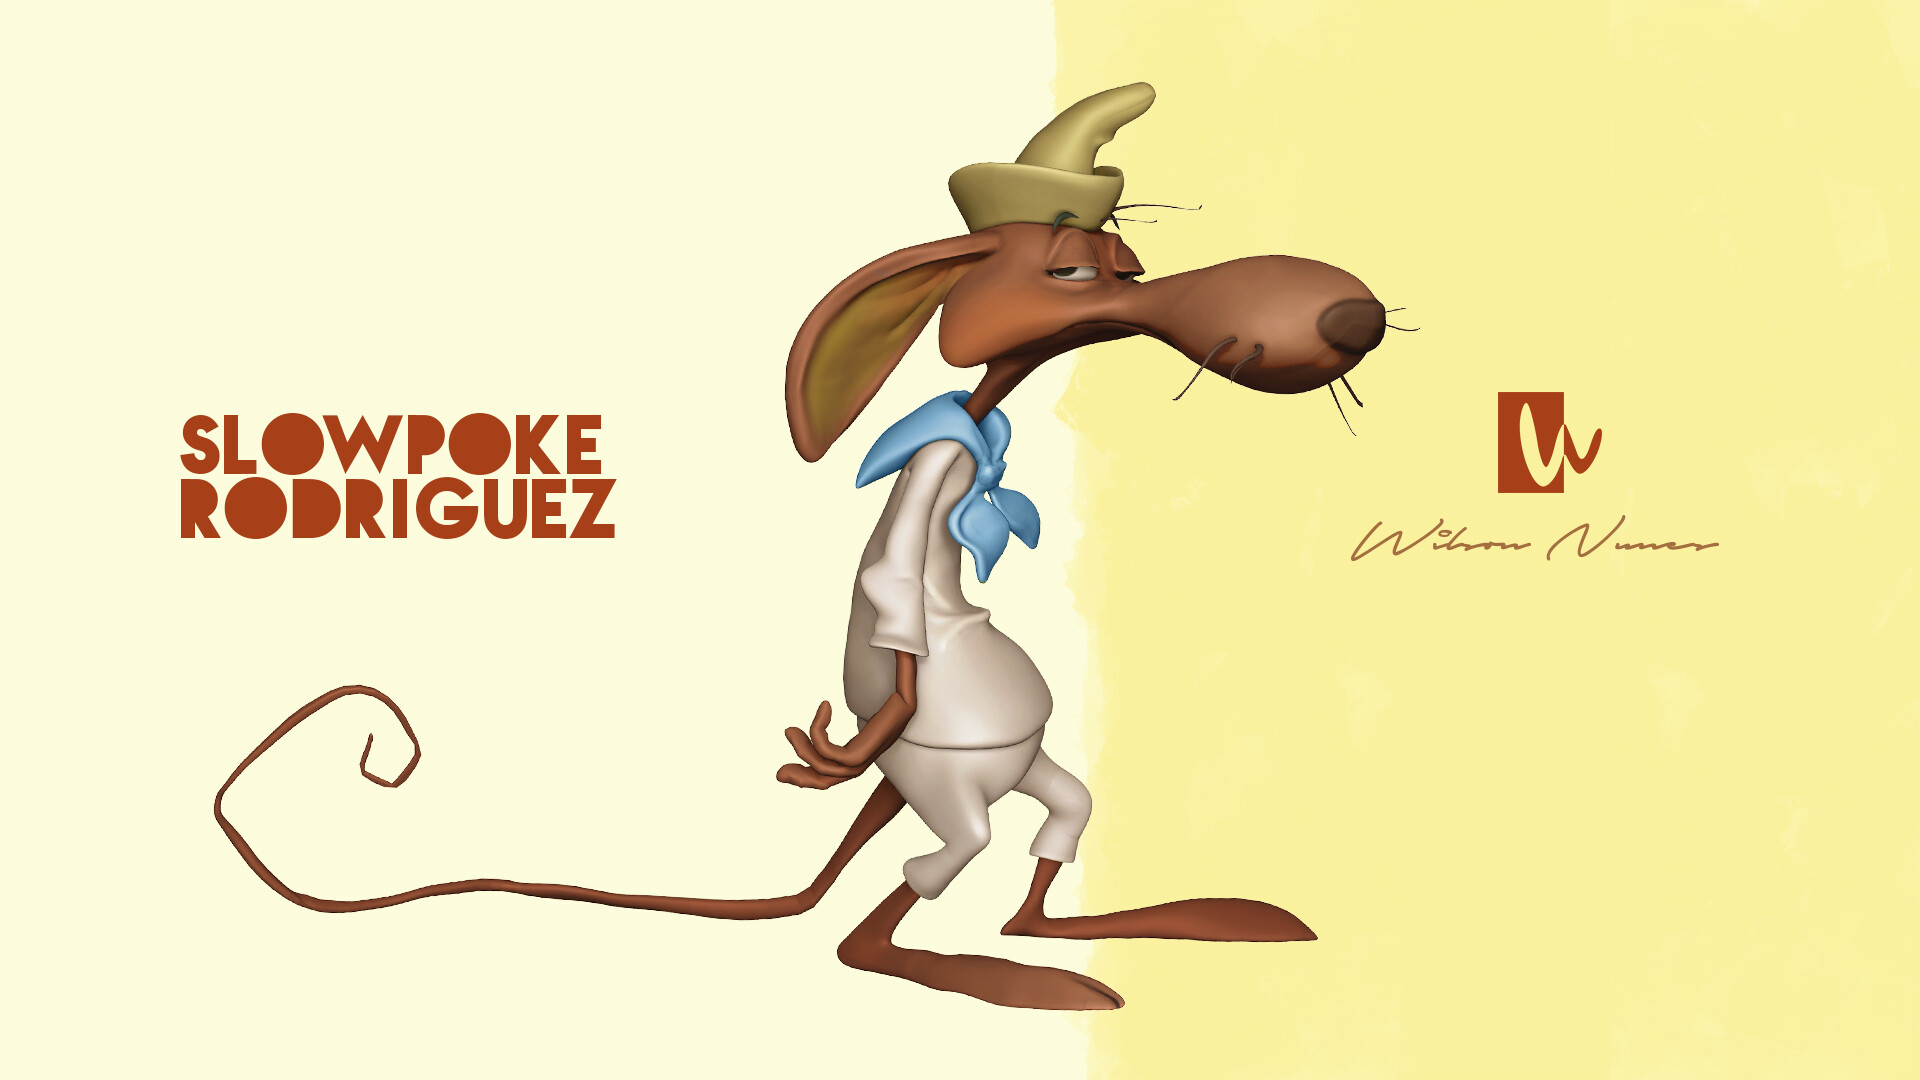 WILSON NUNES LUZ - Slowpoke Rodriguez